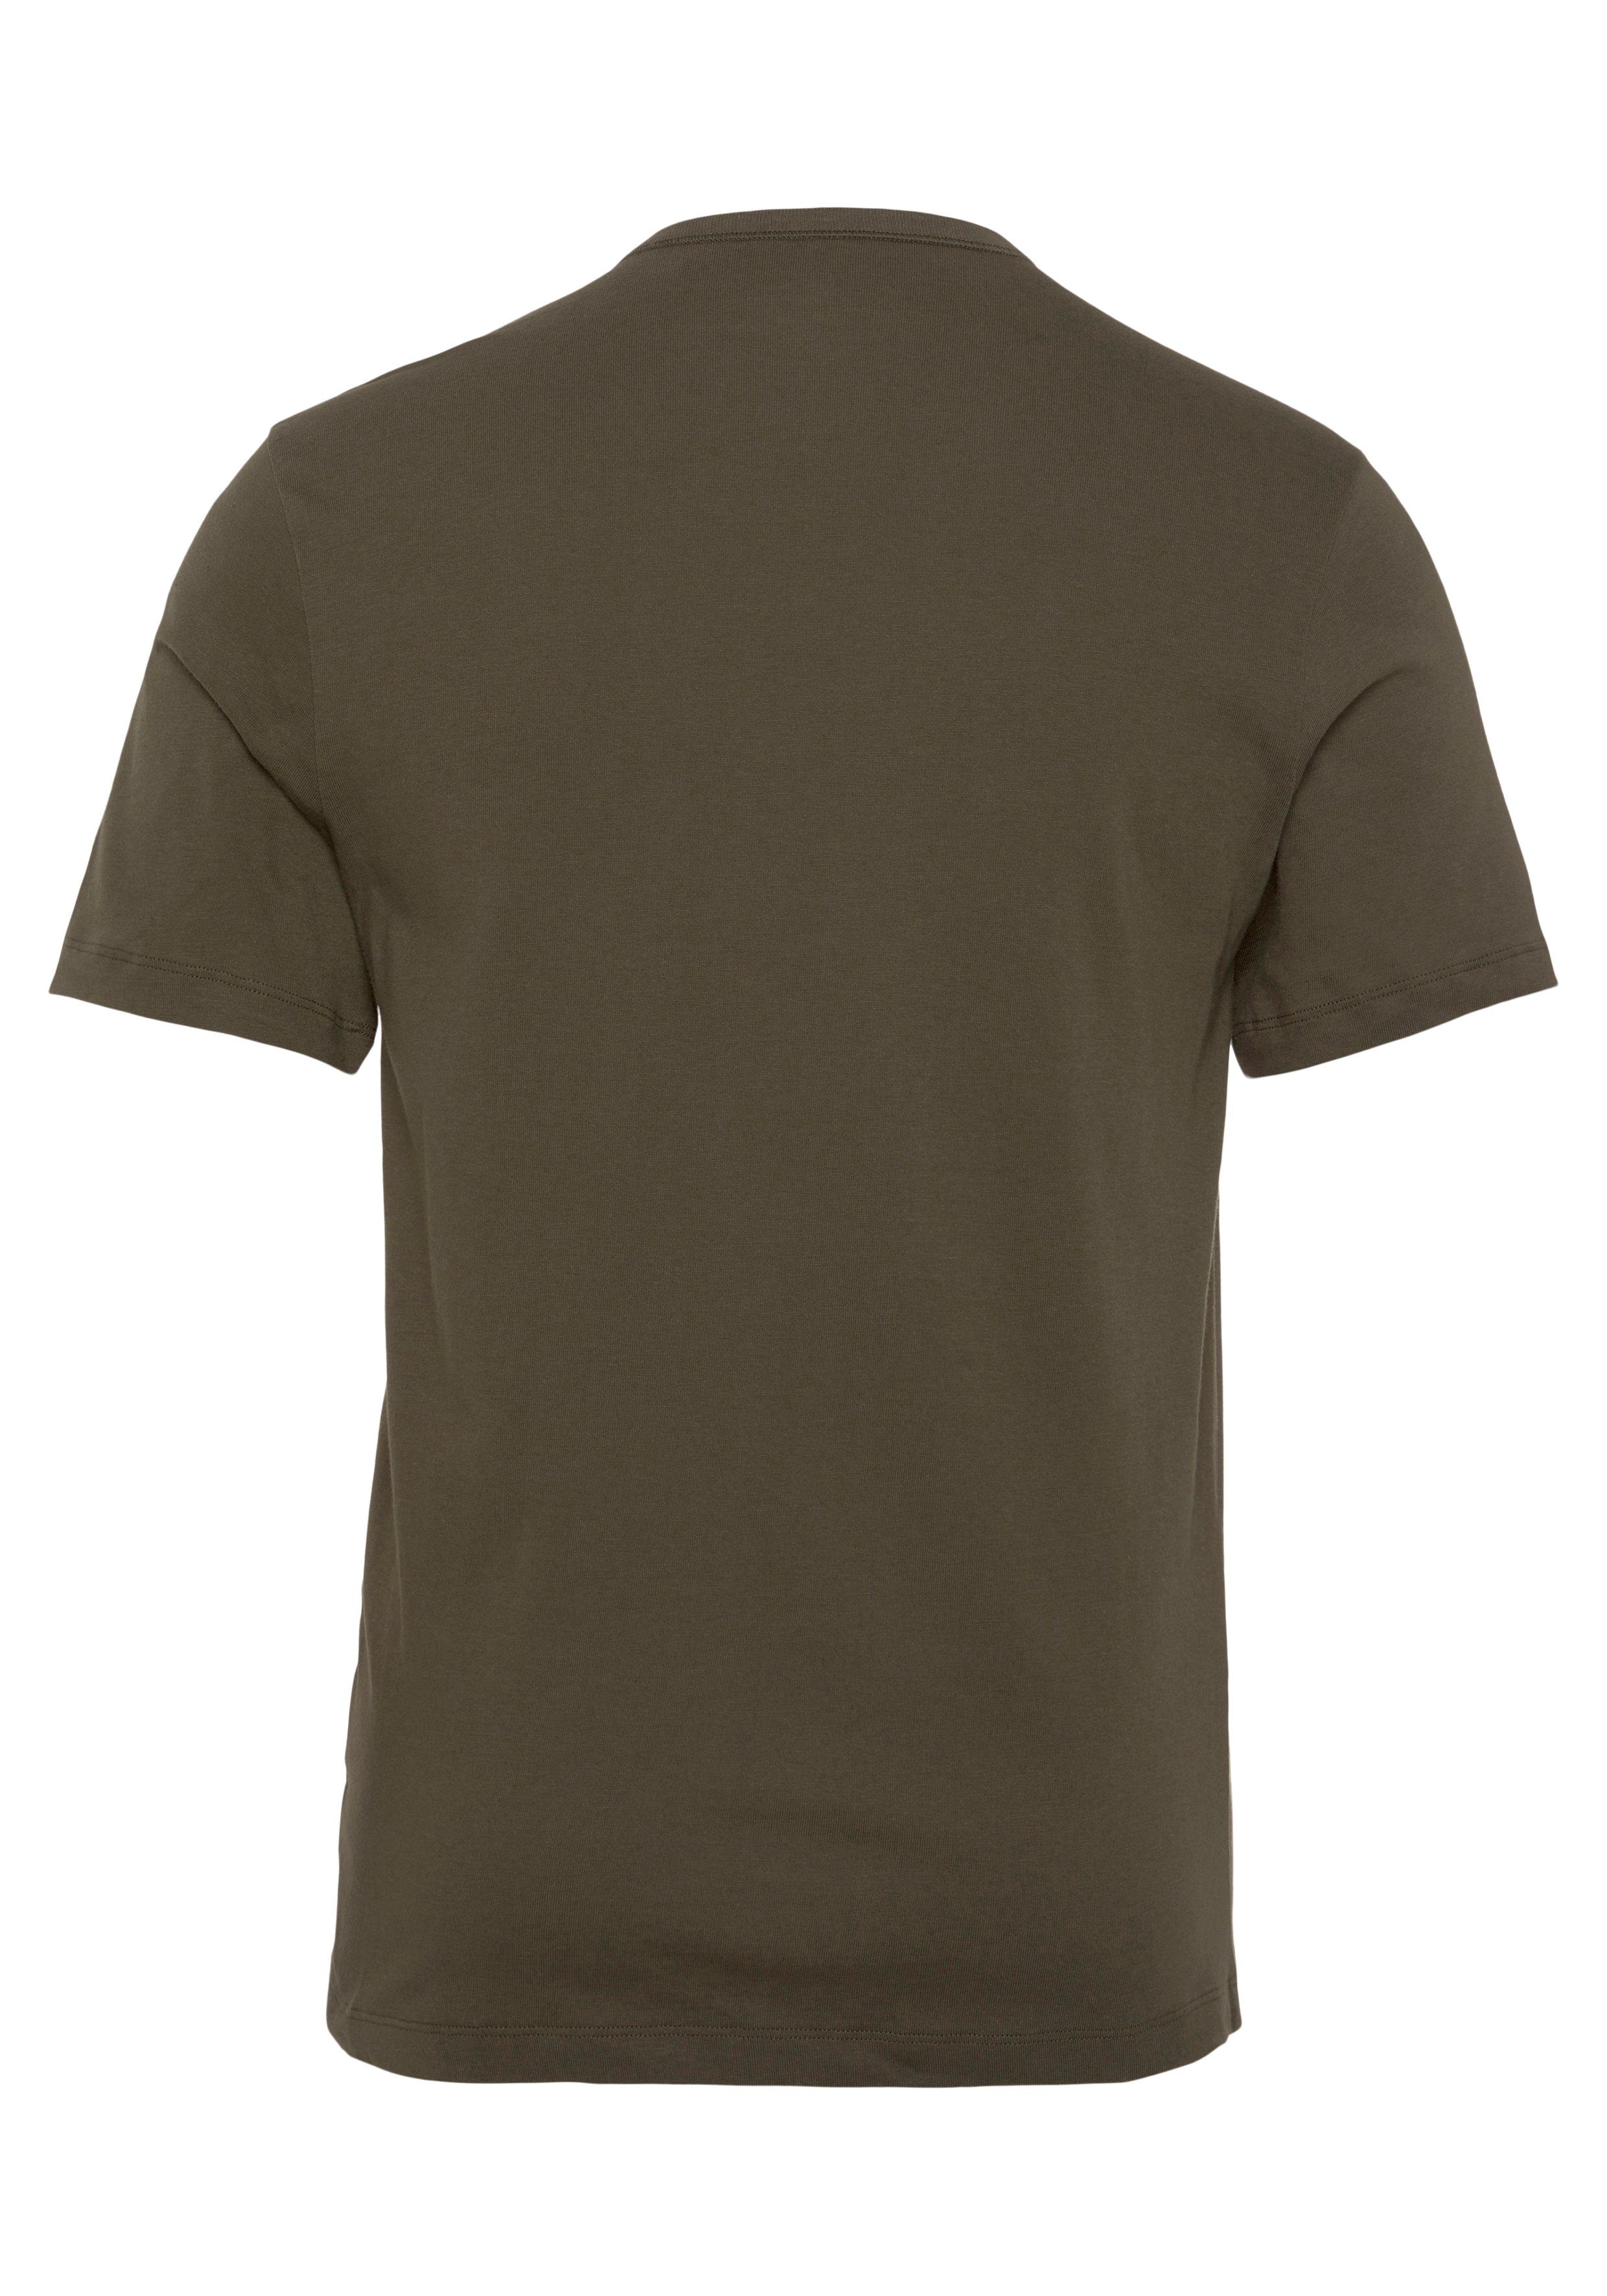 Brust BOSS (Set, mit der auf BOSS Schriftzug T-Shirt 3-tlg) schwarz/dunkelblau/khaki980